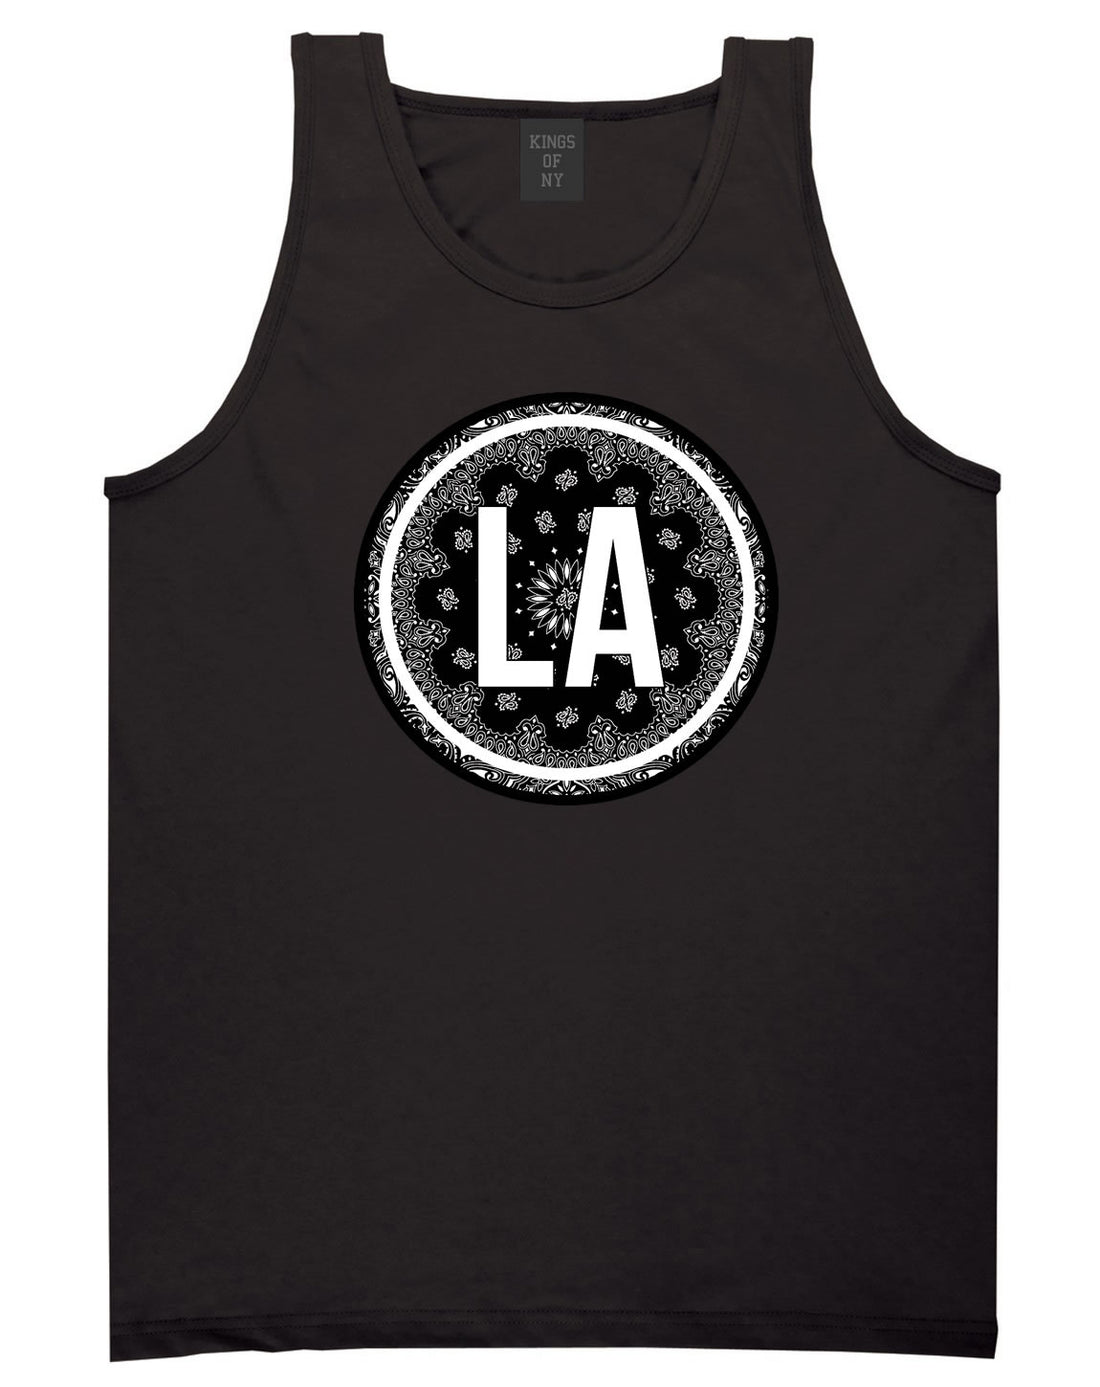 Kings Of NY La Los Angeles Cali California Bandana Tank Top in Black